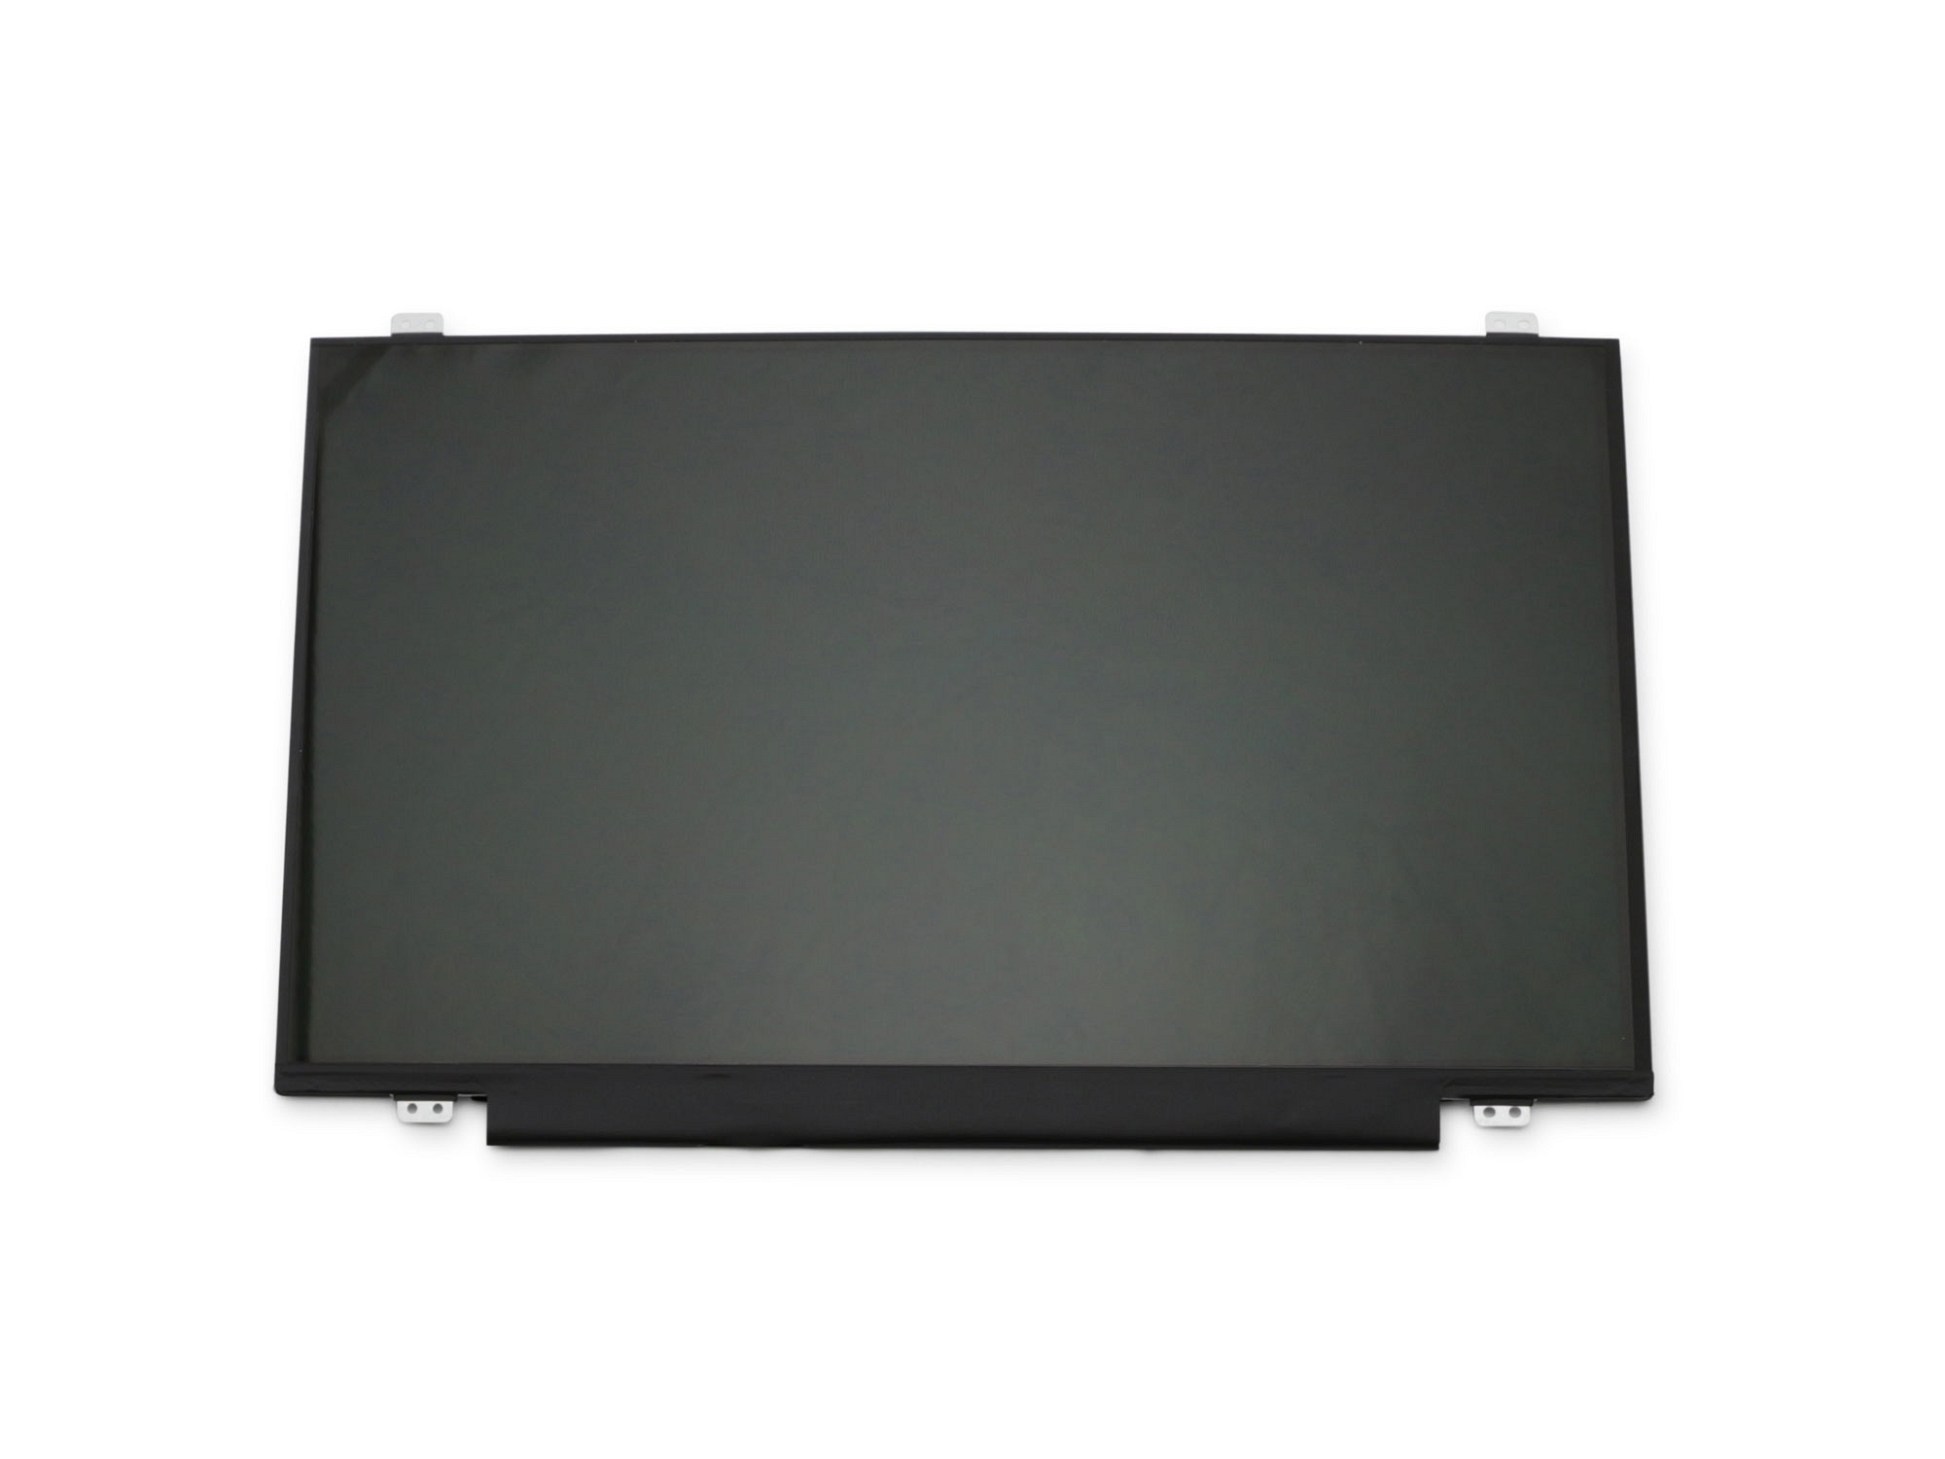 LG LP140WH8-TPH2 Display (1366x768) glänzend slimline